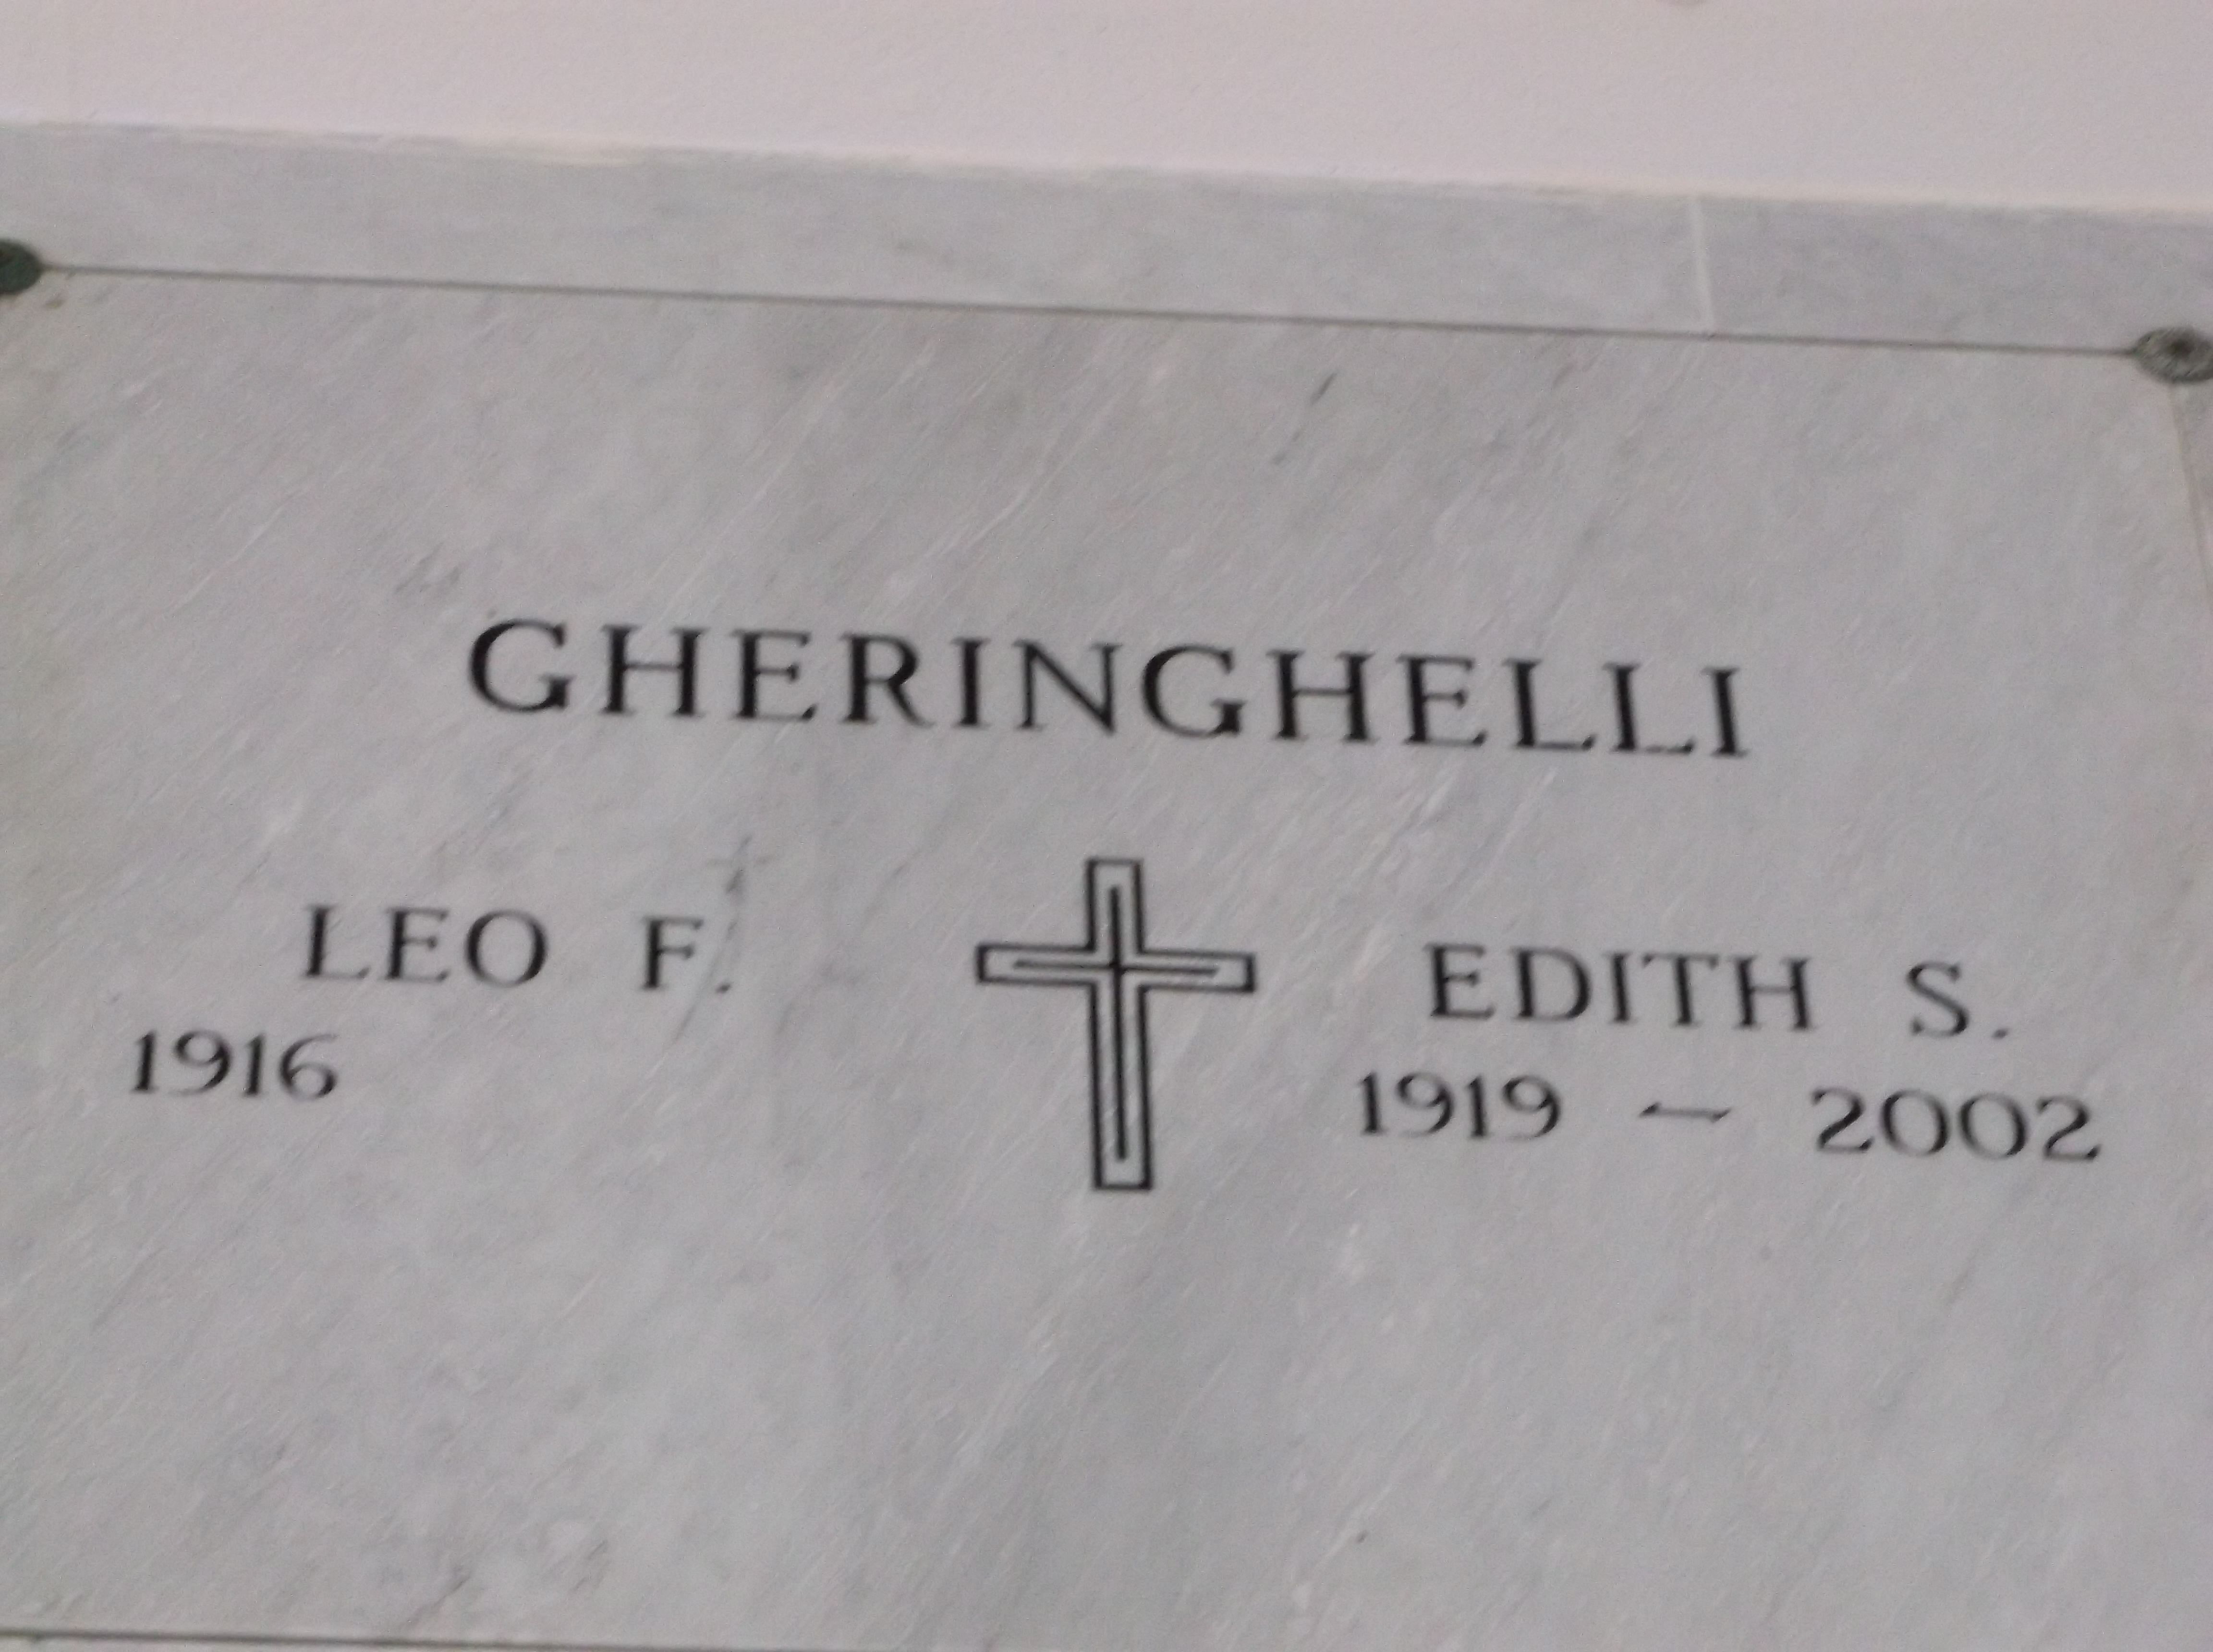 Edith S Gheringhelli